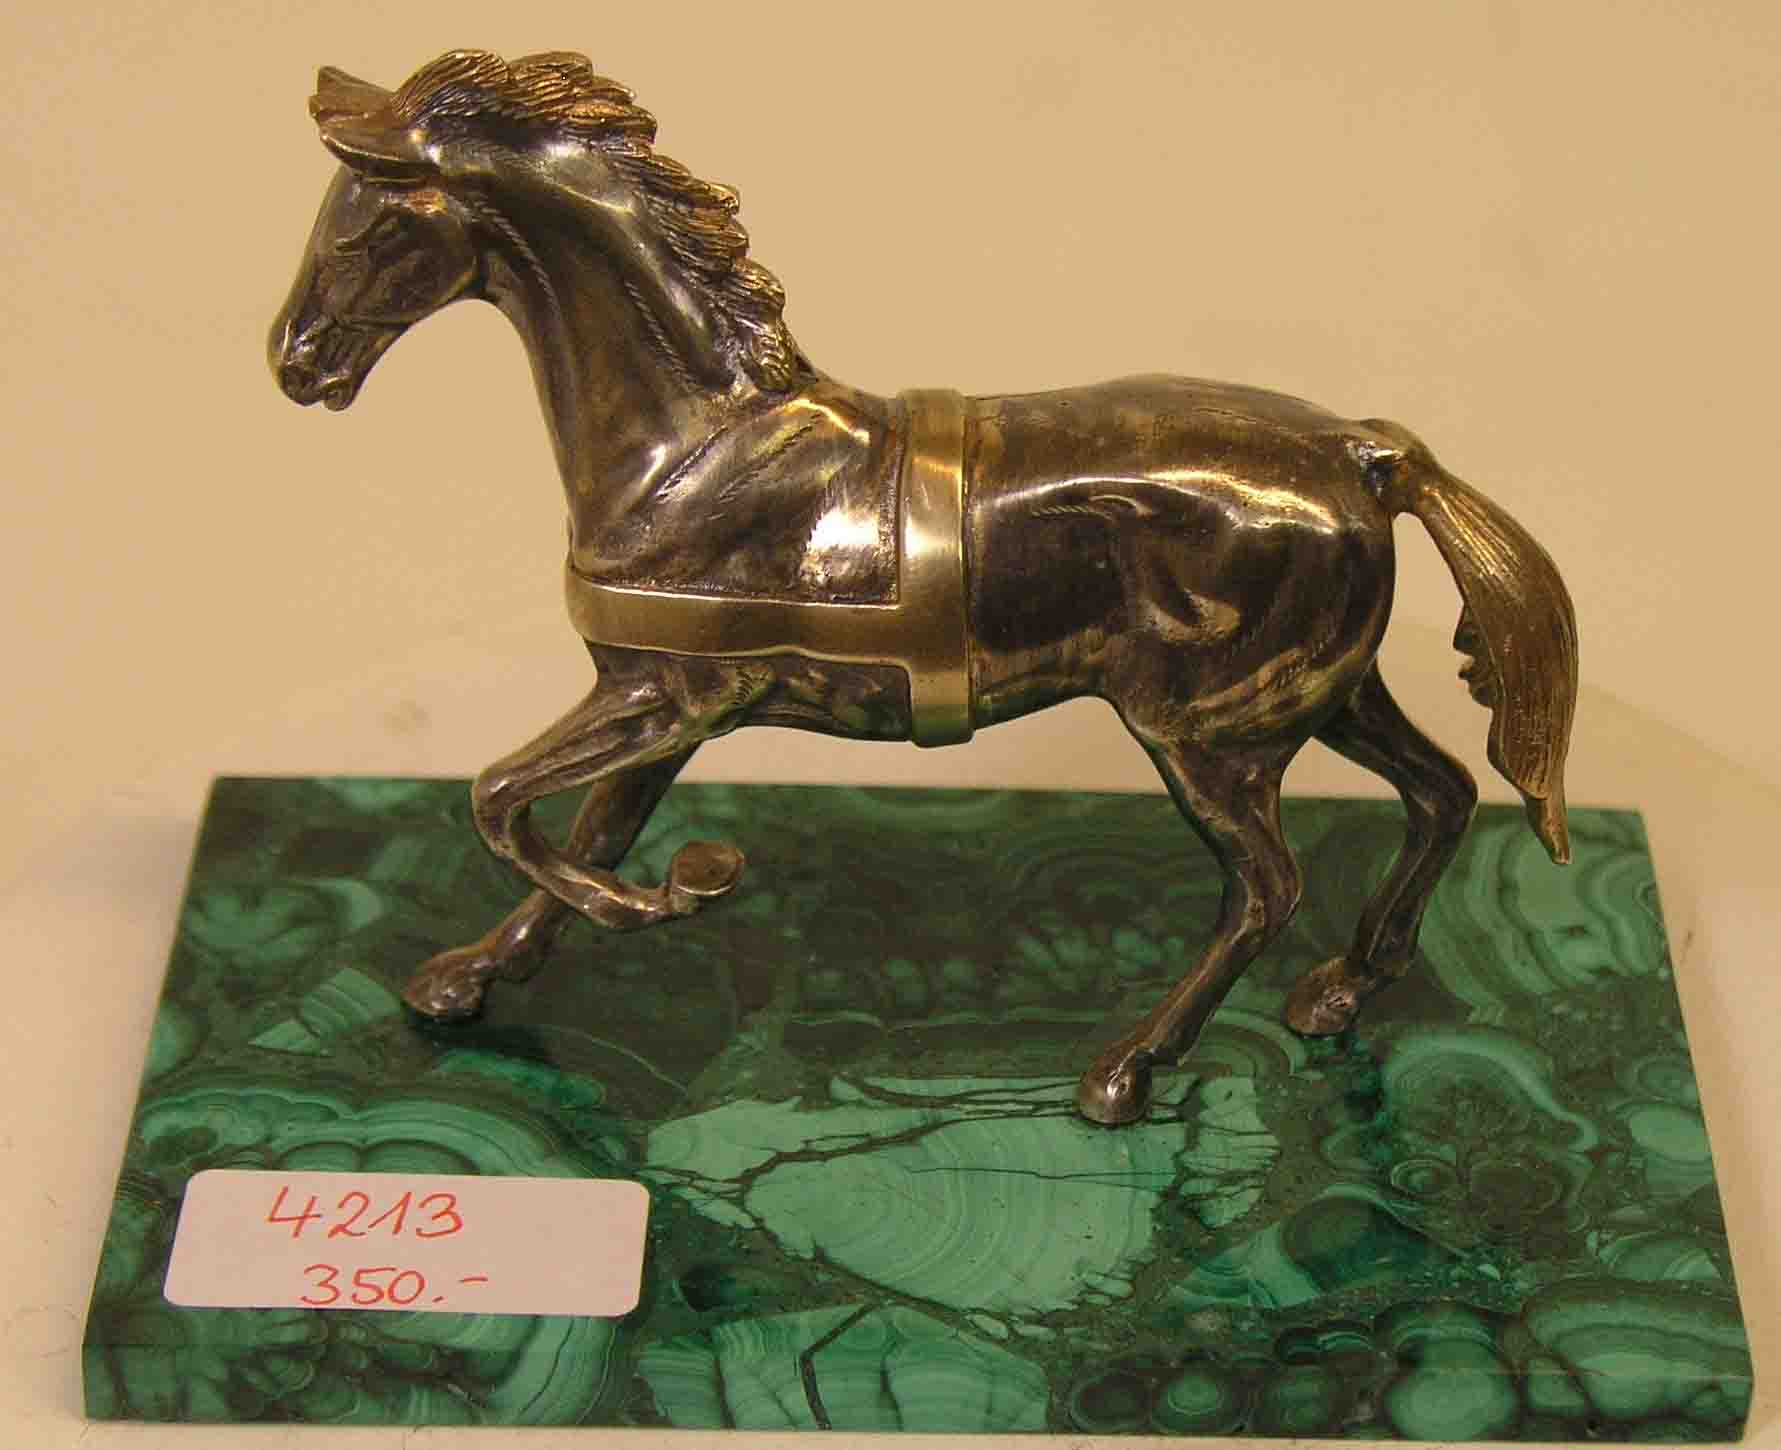 Pferdeskulptur auf rechteckiger Malachitplatte. Russische Juwelierarbeit, 84erSilberpunze, H x B: